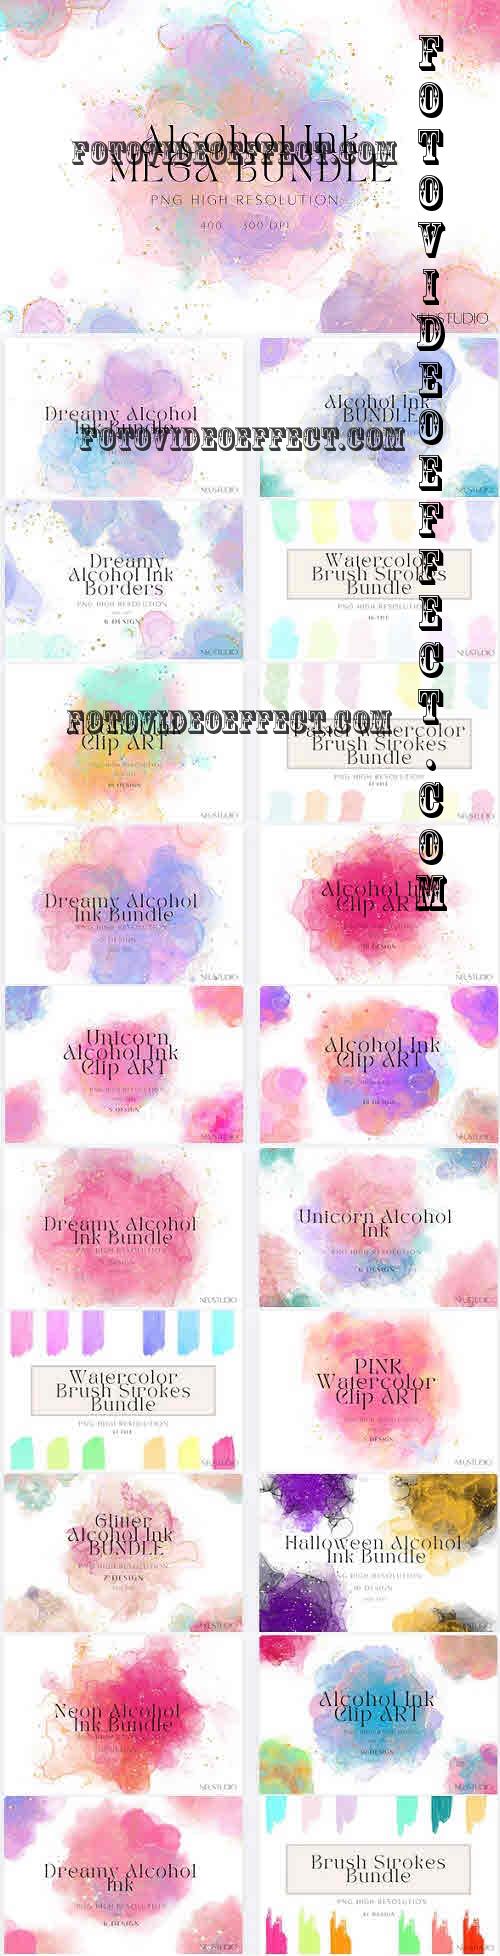 Alcohol Ink Watercolor Mega Bundle - 20 Premium Graphics